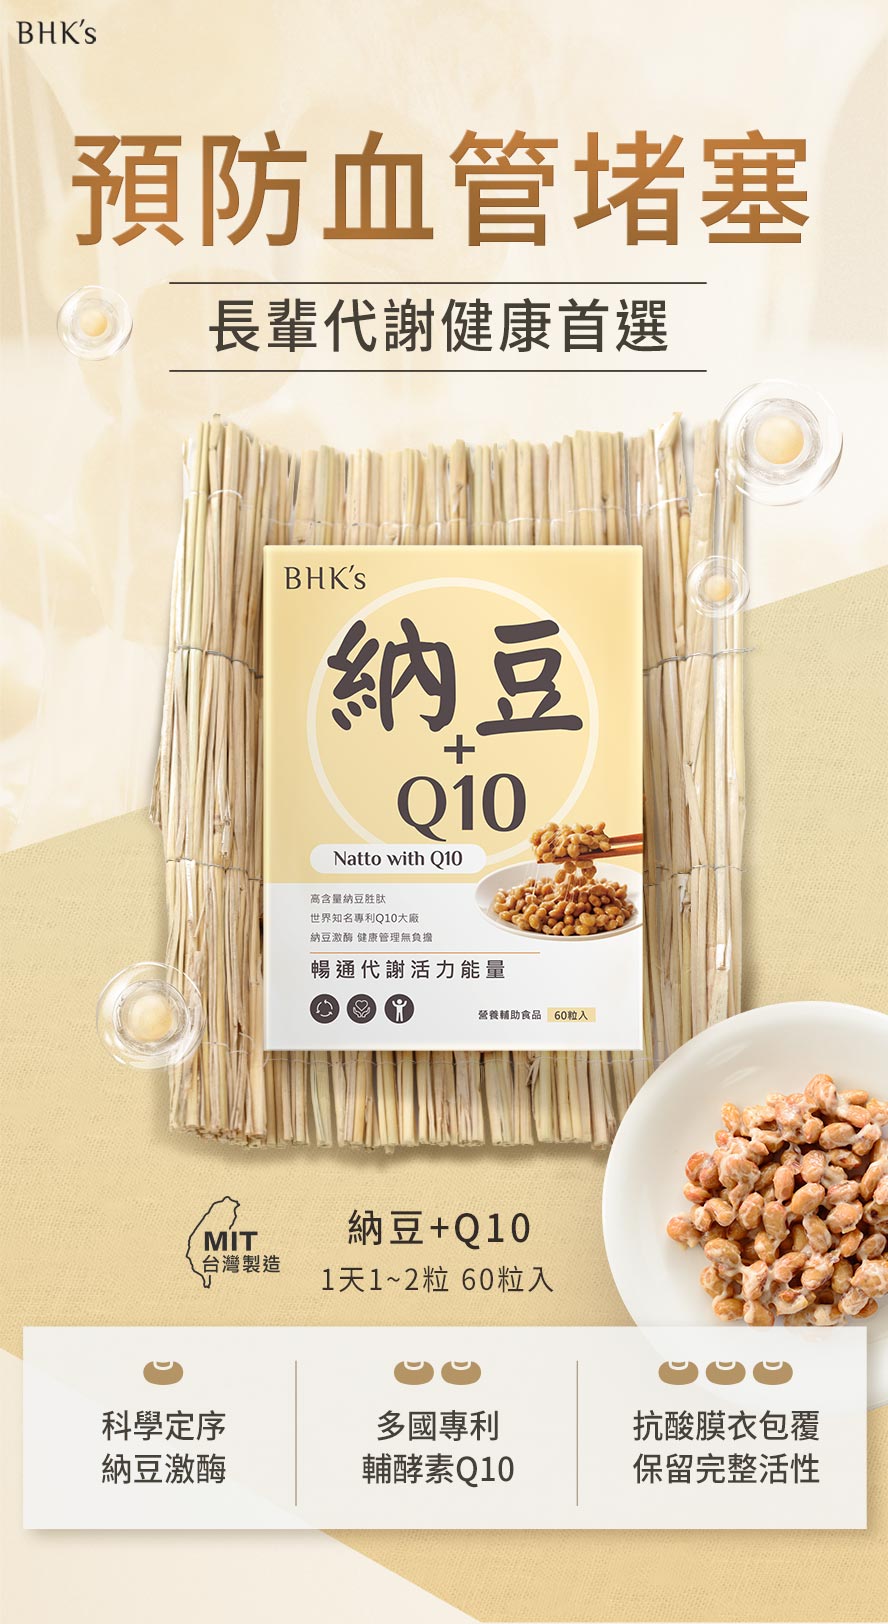 BHK's納豆+Q10產品介紹。